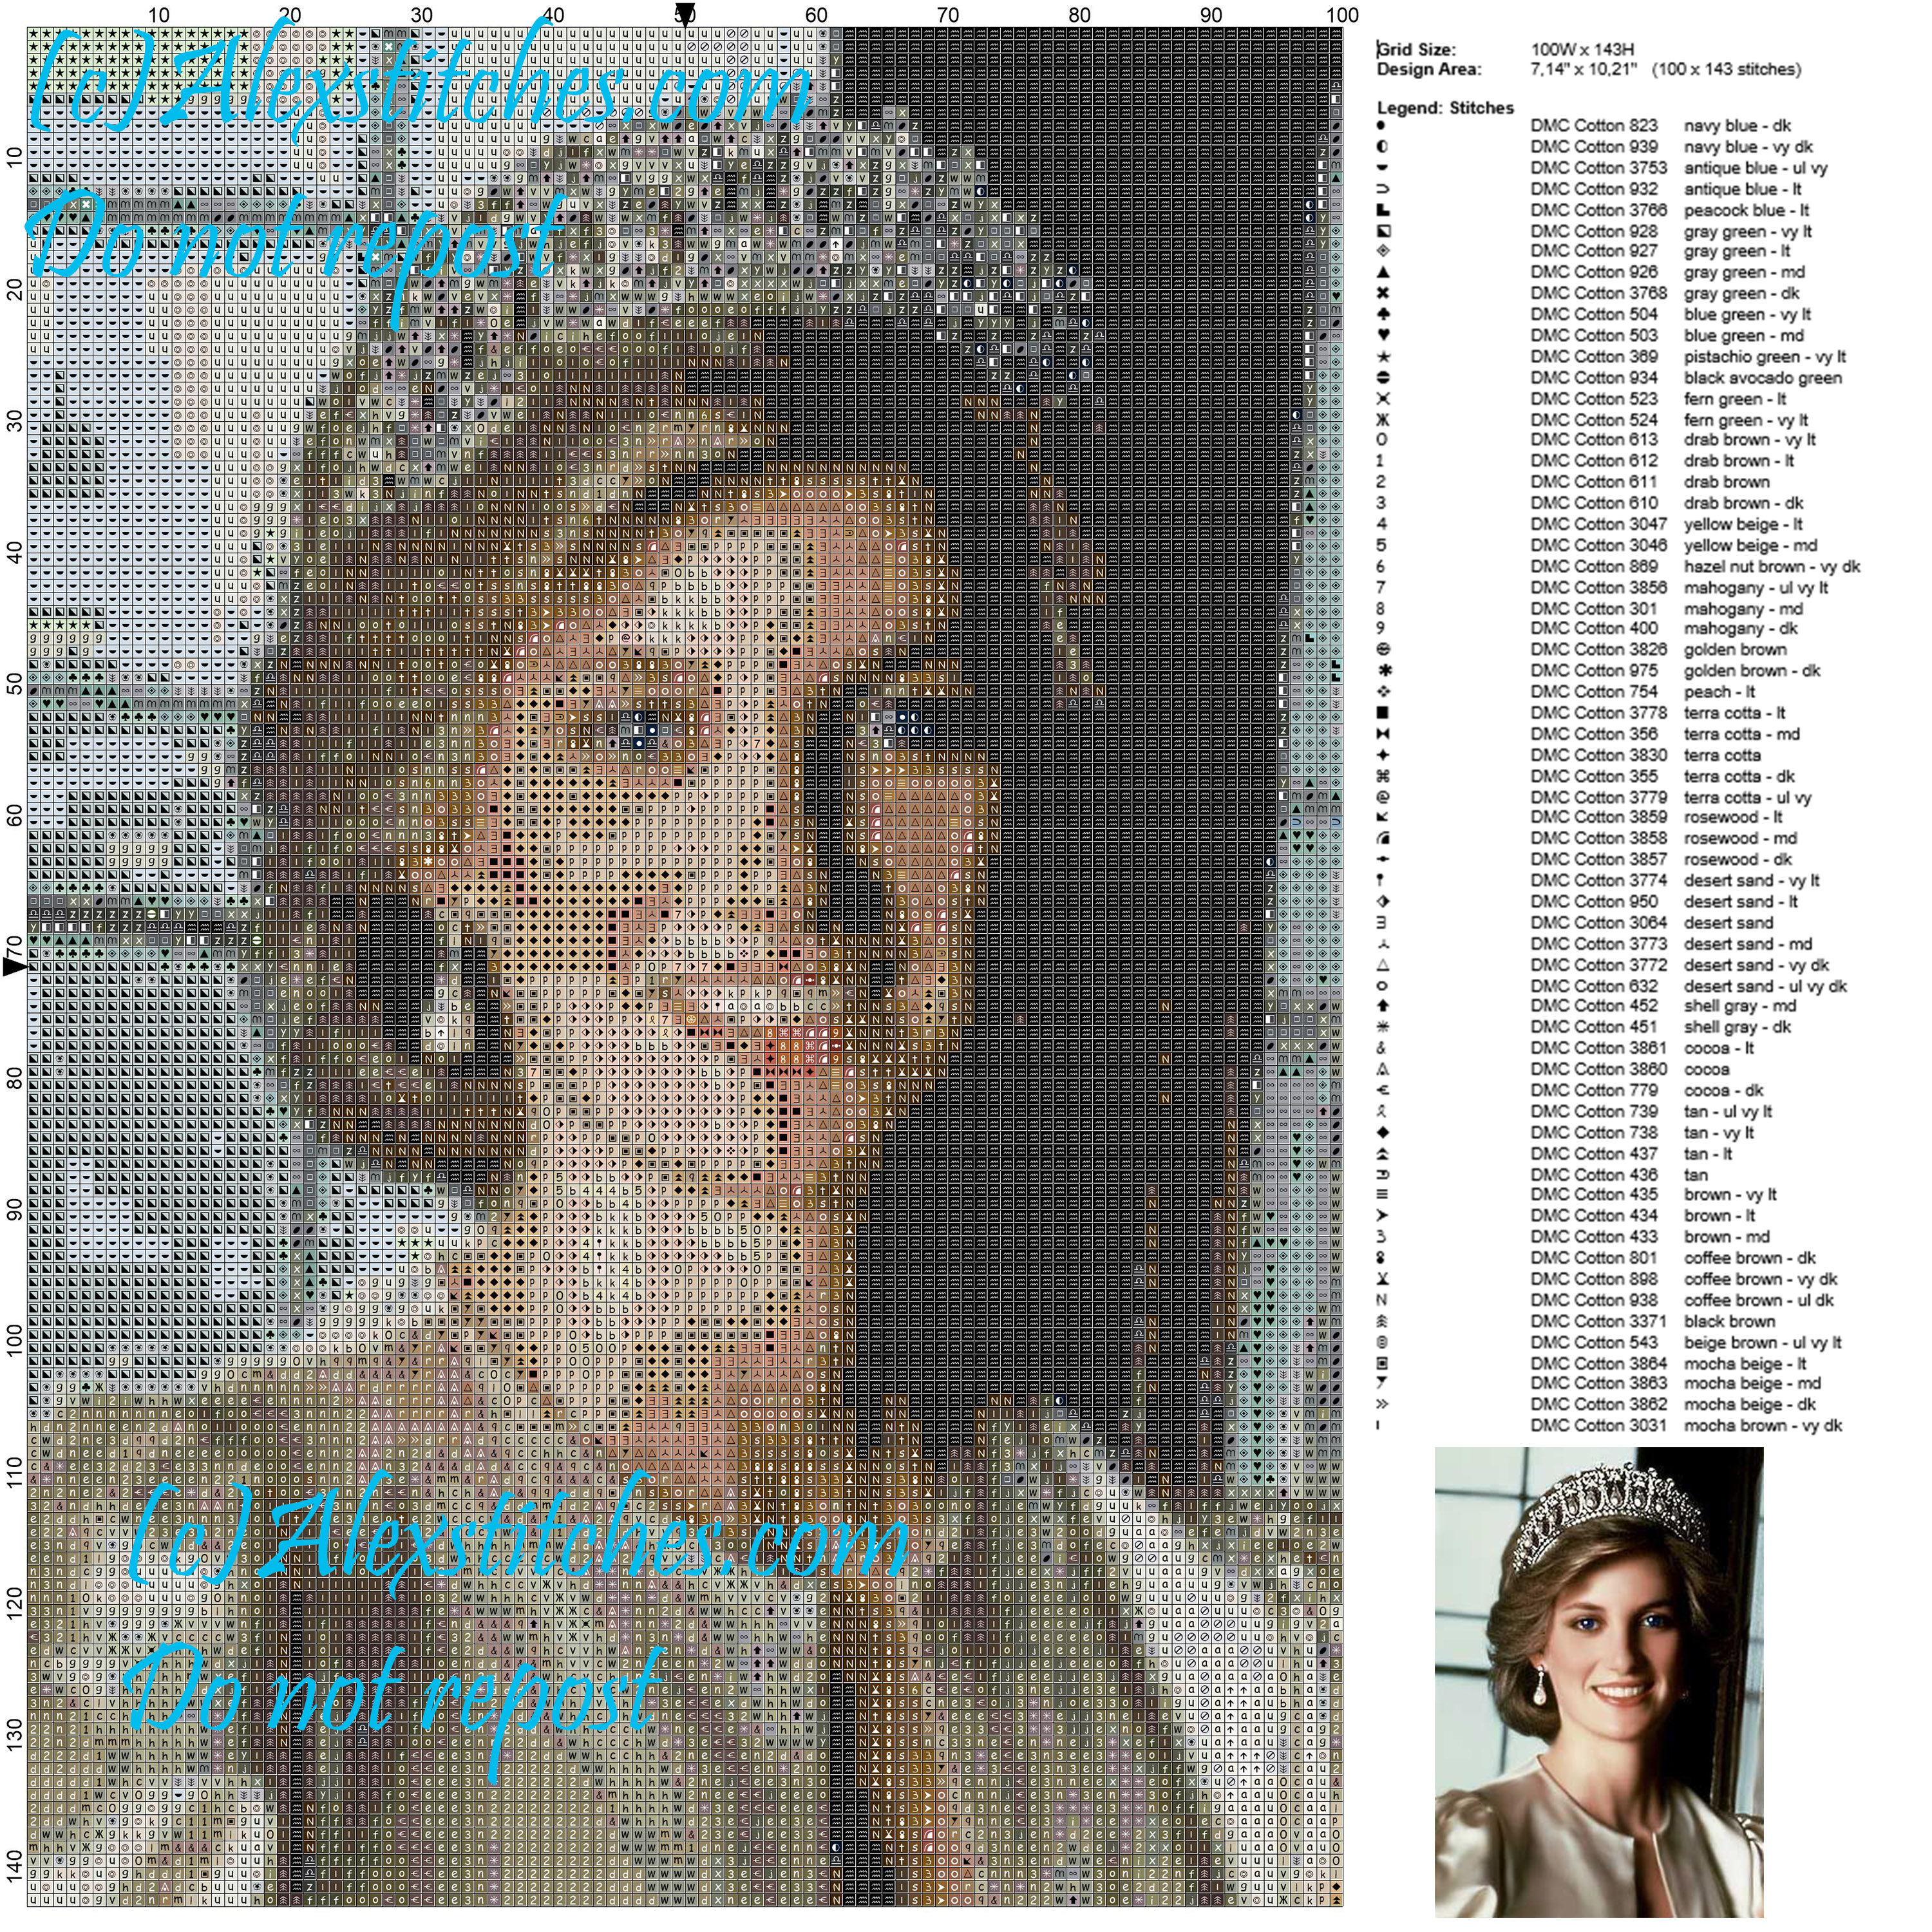 Lady Diana cross stitch pattern 100x143 100 colors